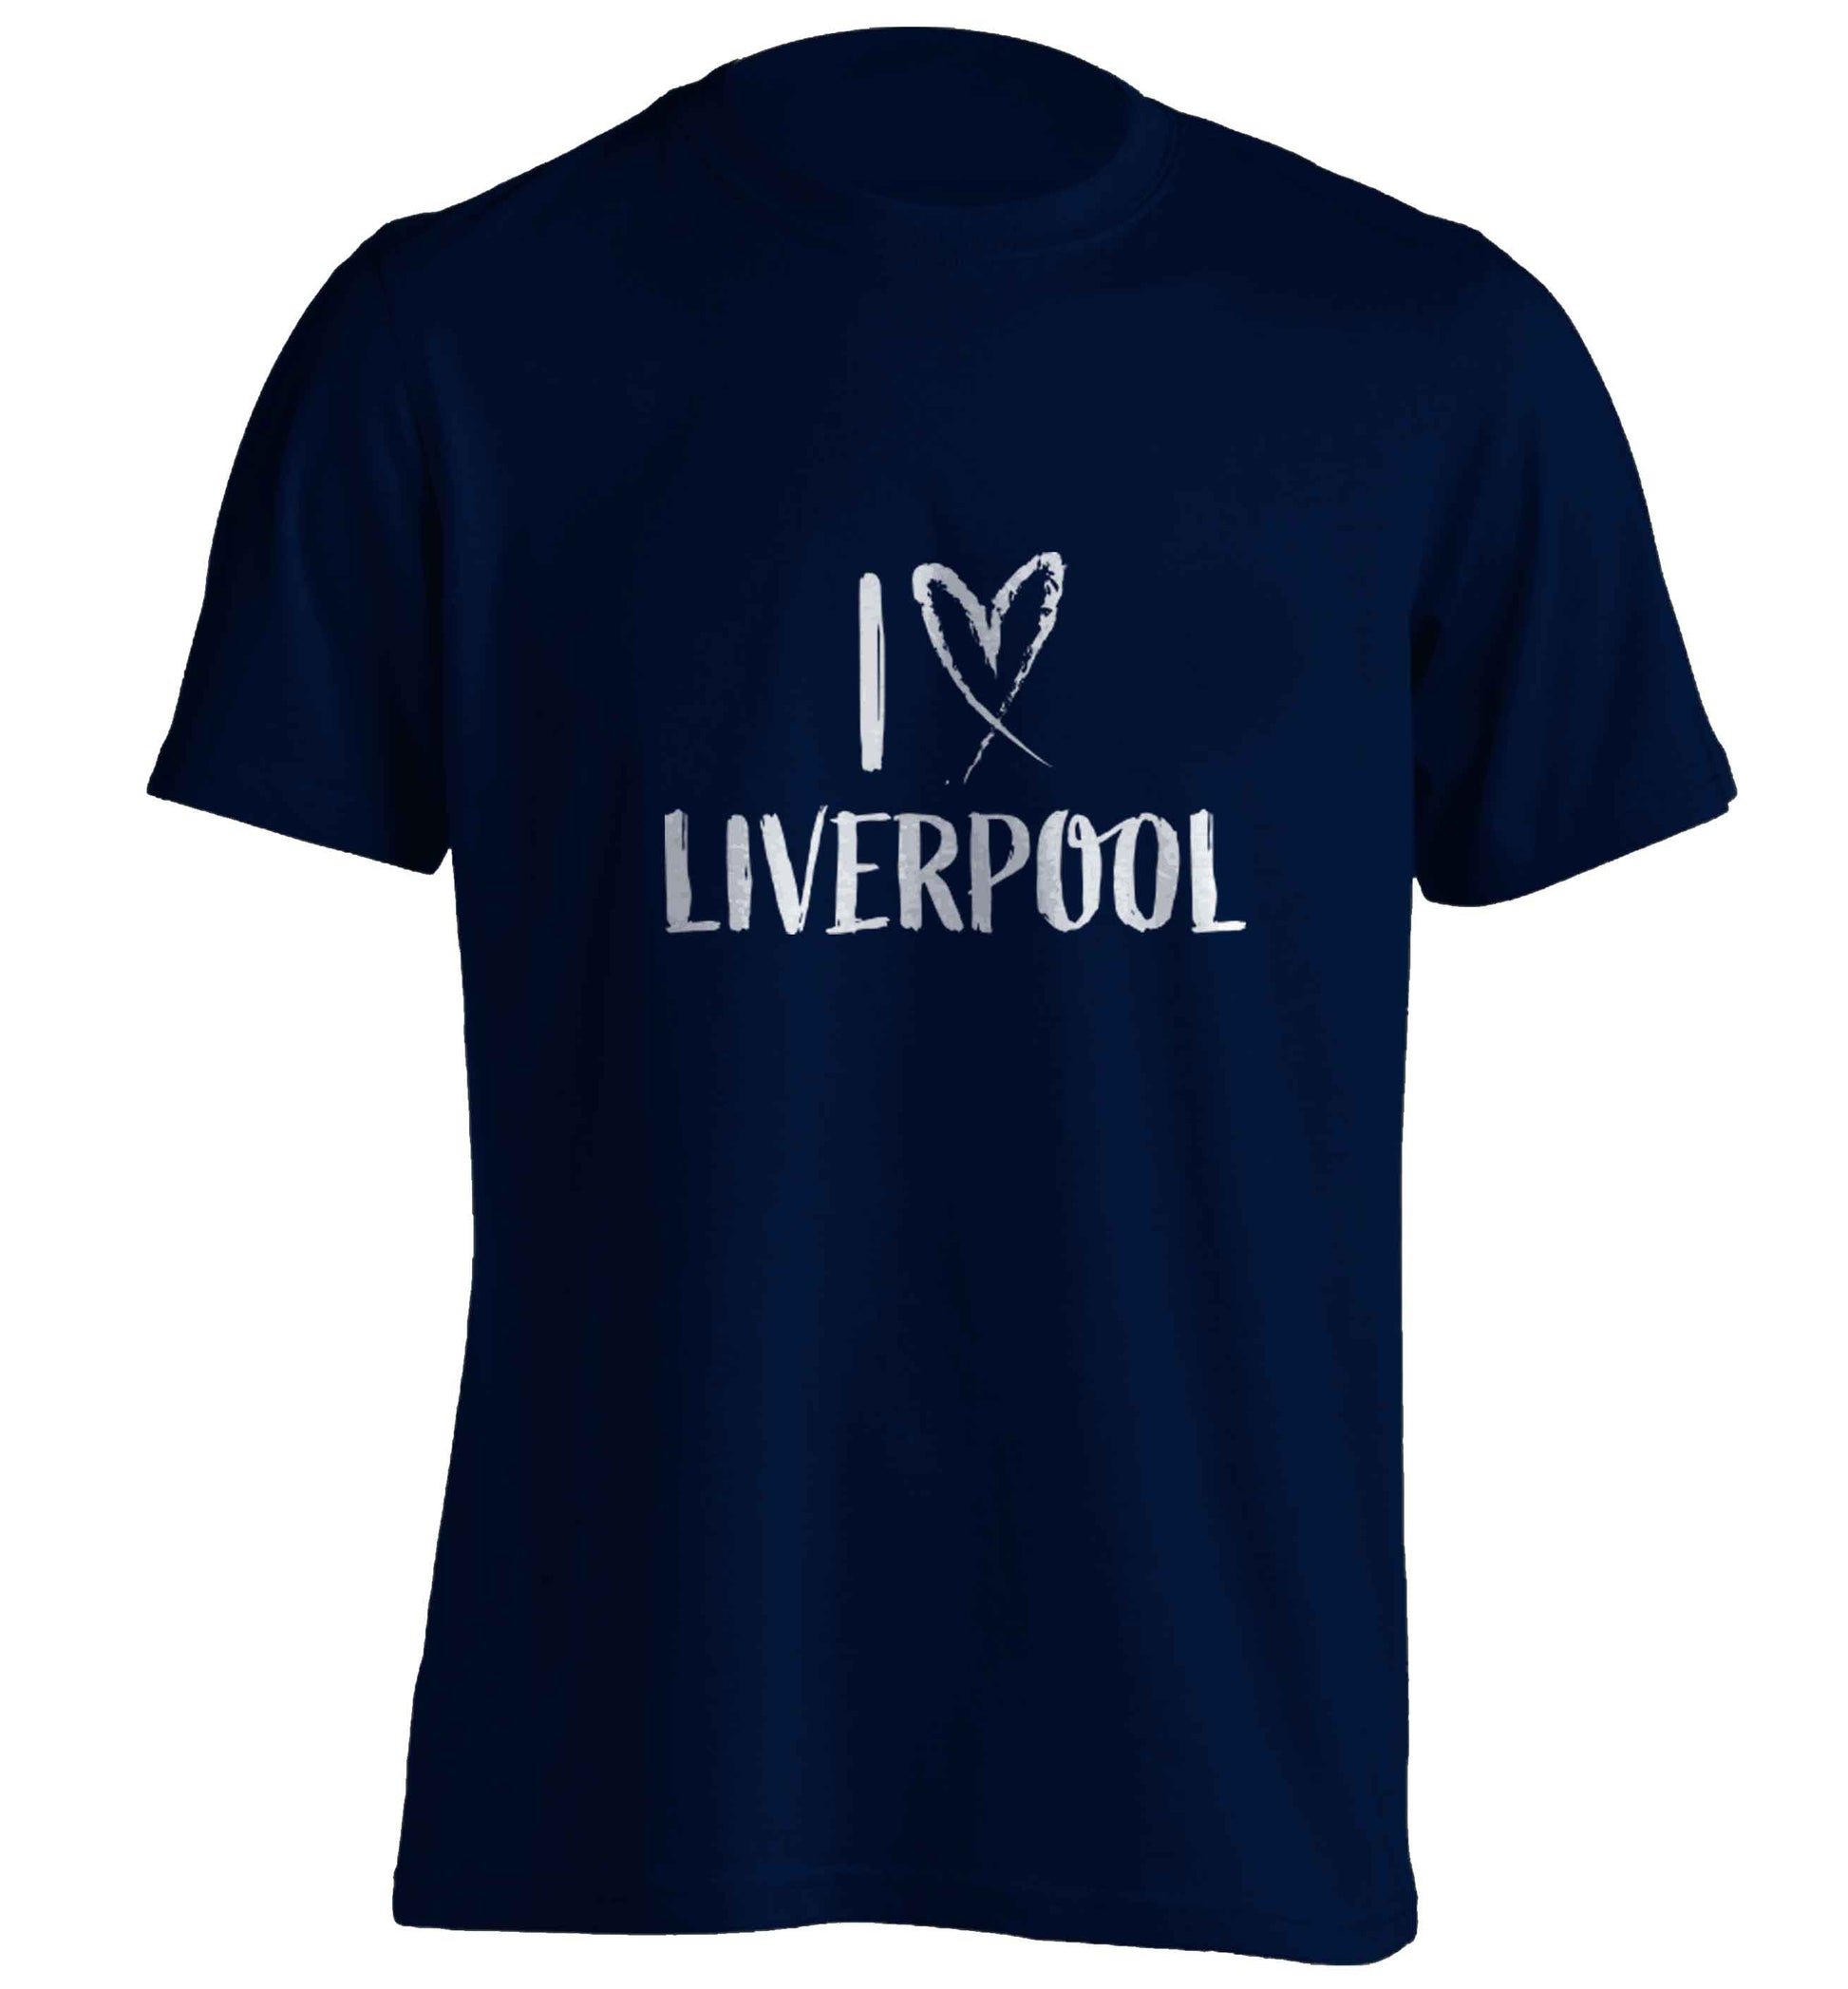 I love Liverpool adults unisex navy Tshirt 2XL